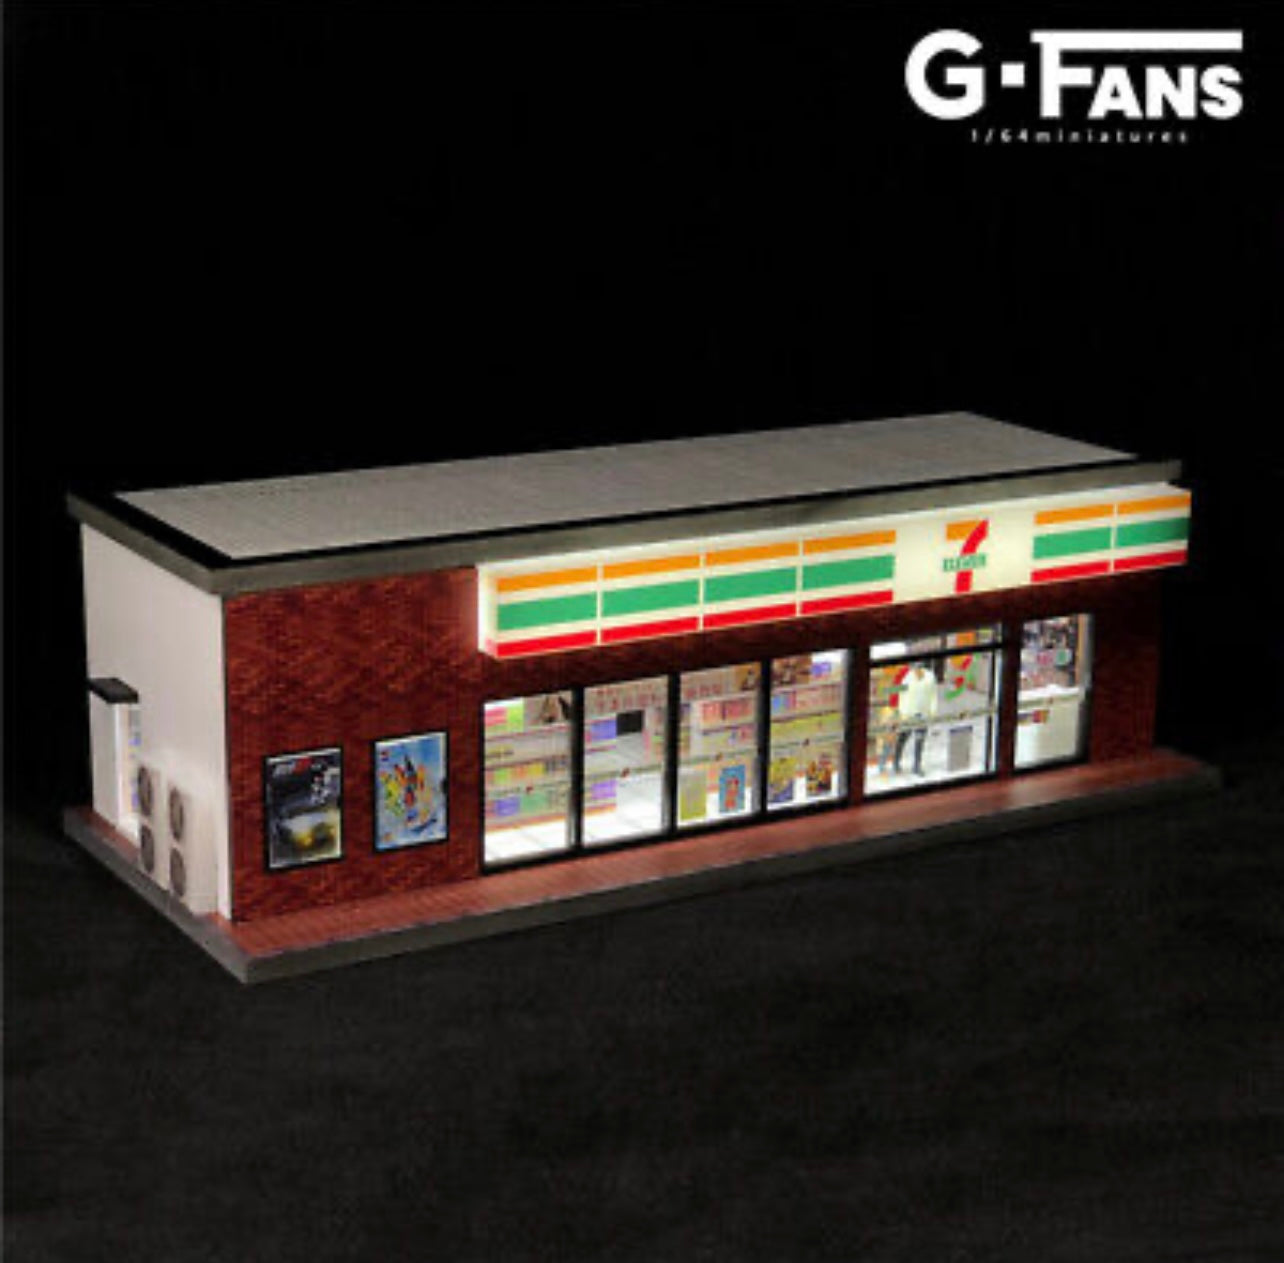 G-Fans 1:64 Diorama Building 7-11